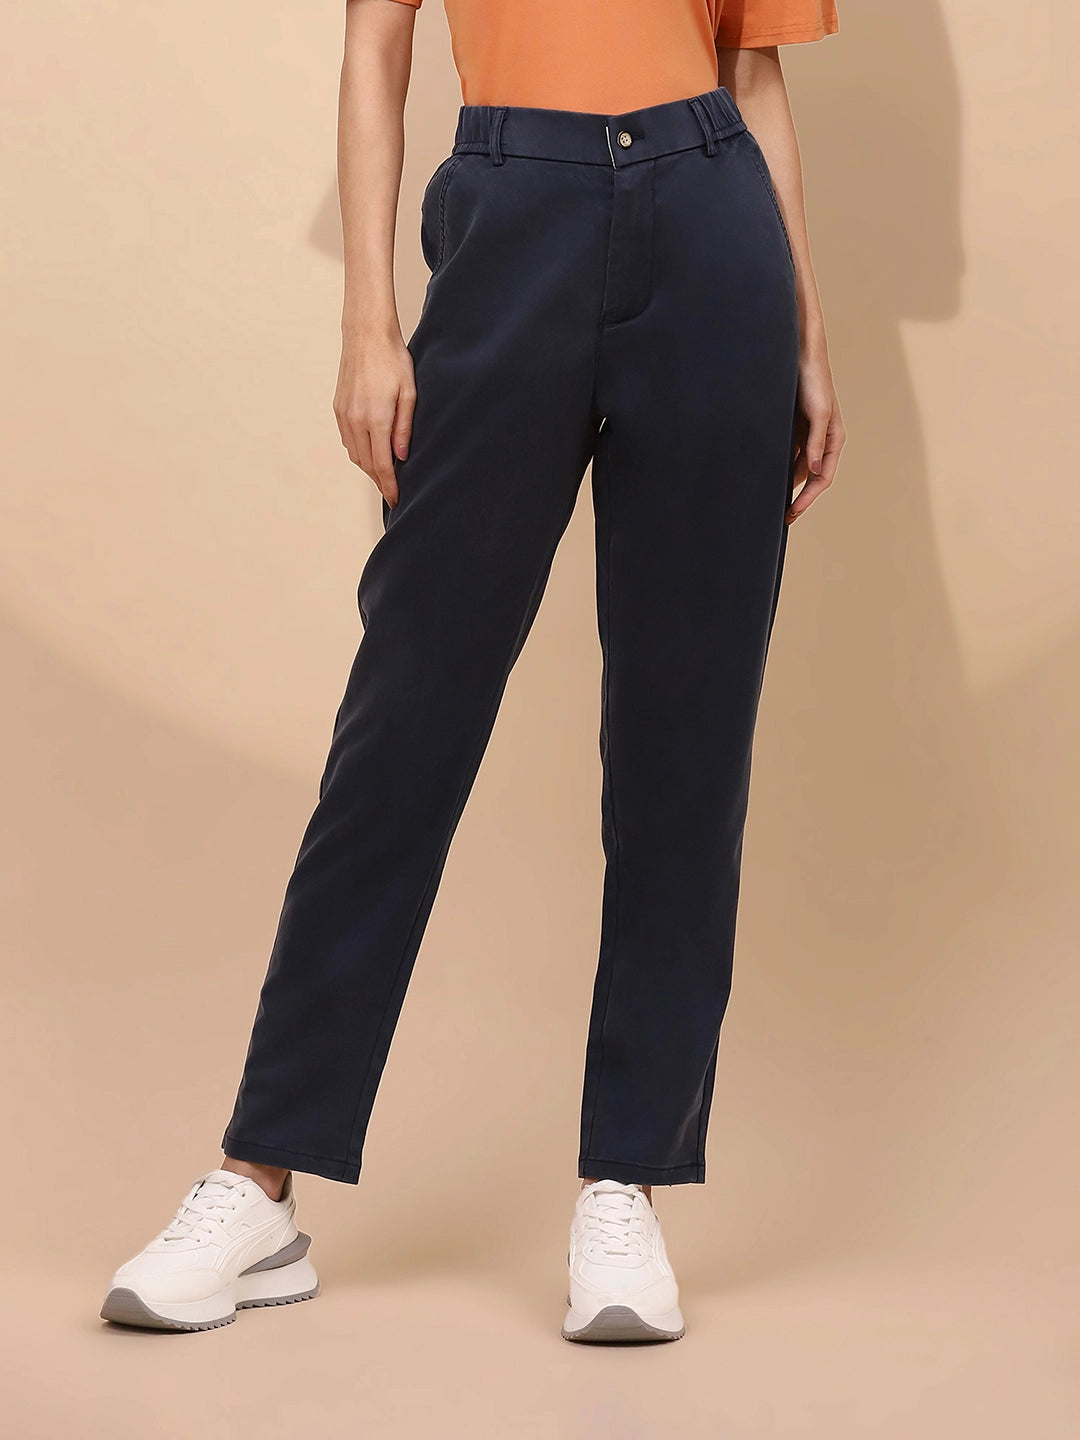 Navy Blue Cotton Blend Slim Fit Trouser For Women